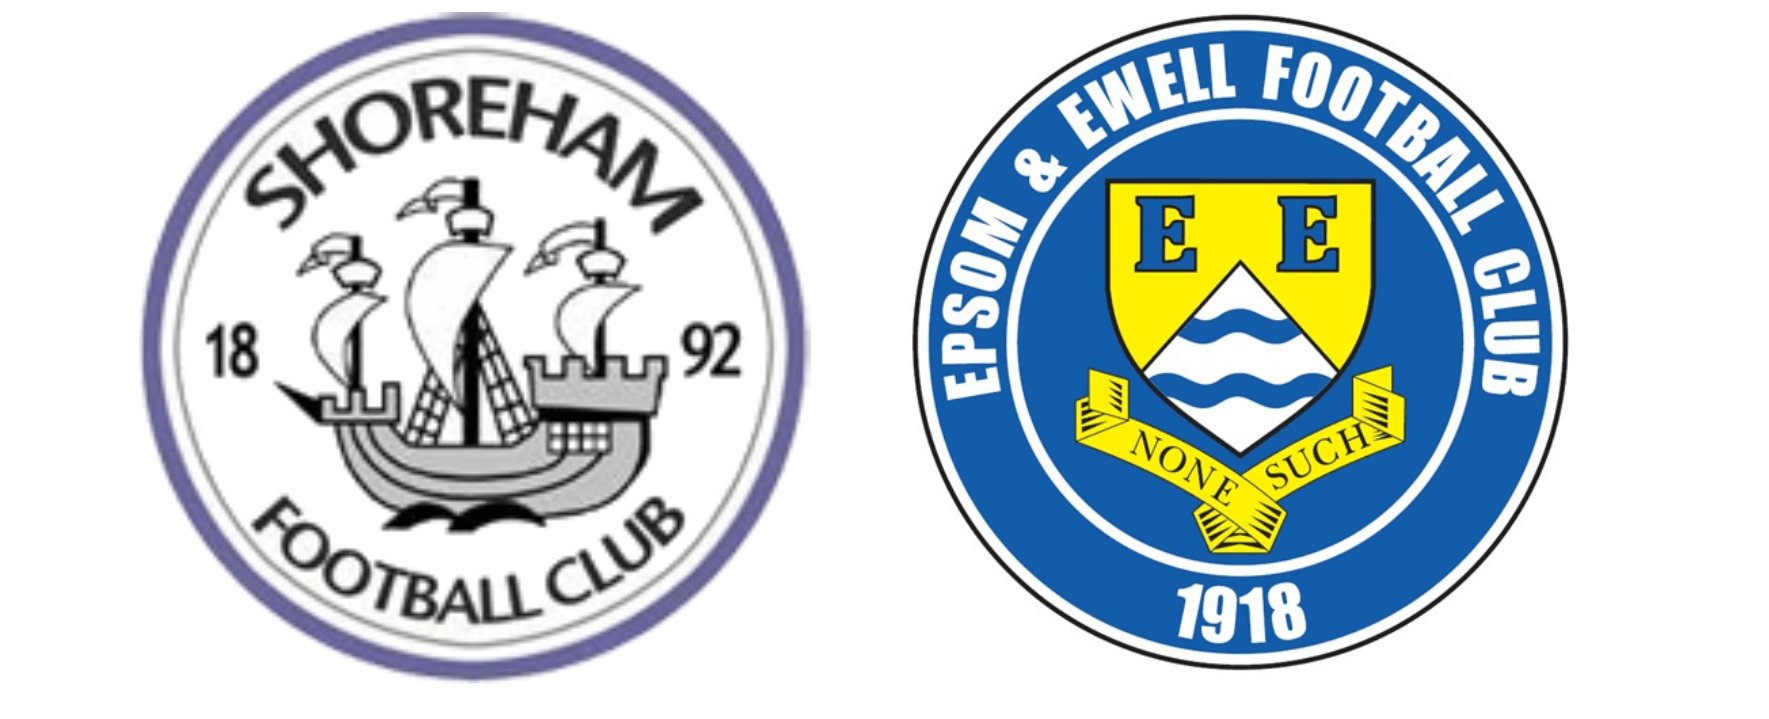 Shoreham and Epsom and Ewell Football Club logos